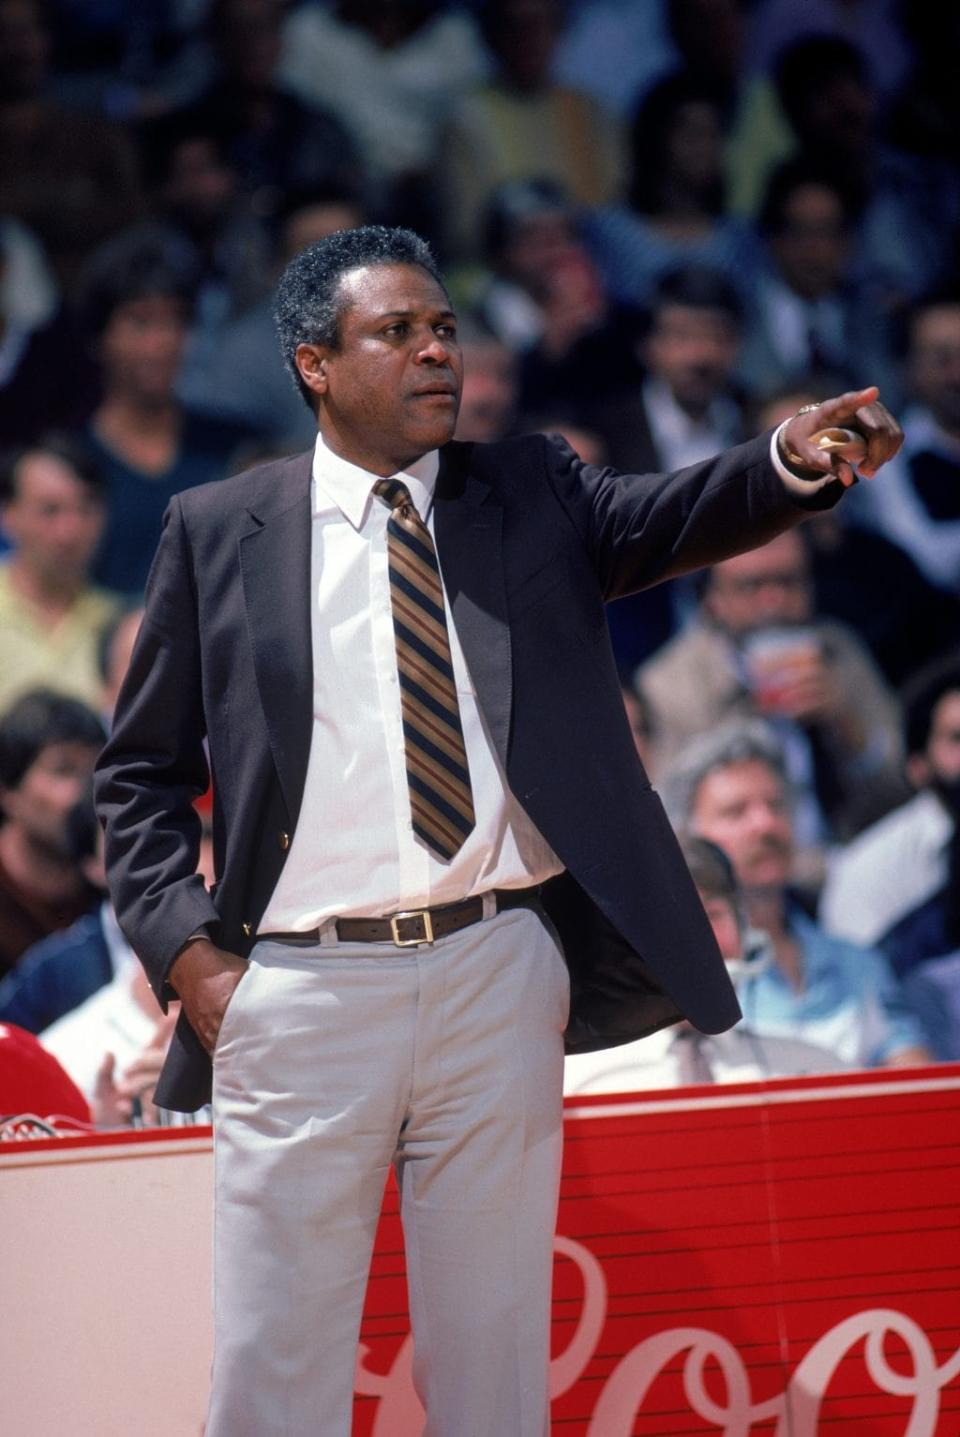 Head coach K.C. Jones of the Boston Celtics points during a NBA season game. K.C. Jones was the head coach of the Boston Celtics from 1983-1988. (Photo by Rick Stewart/Getty Images)